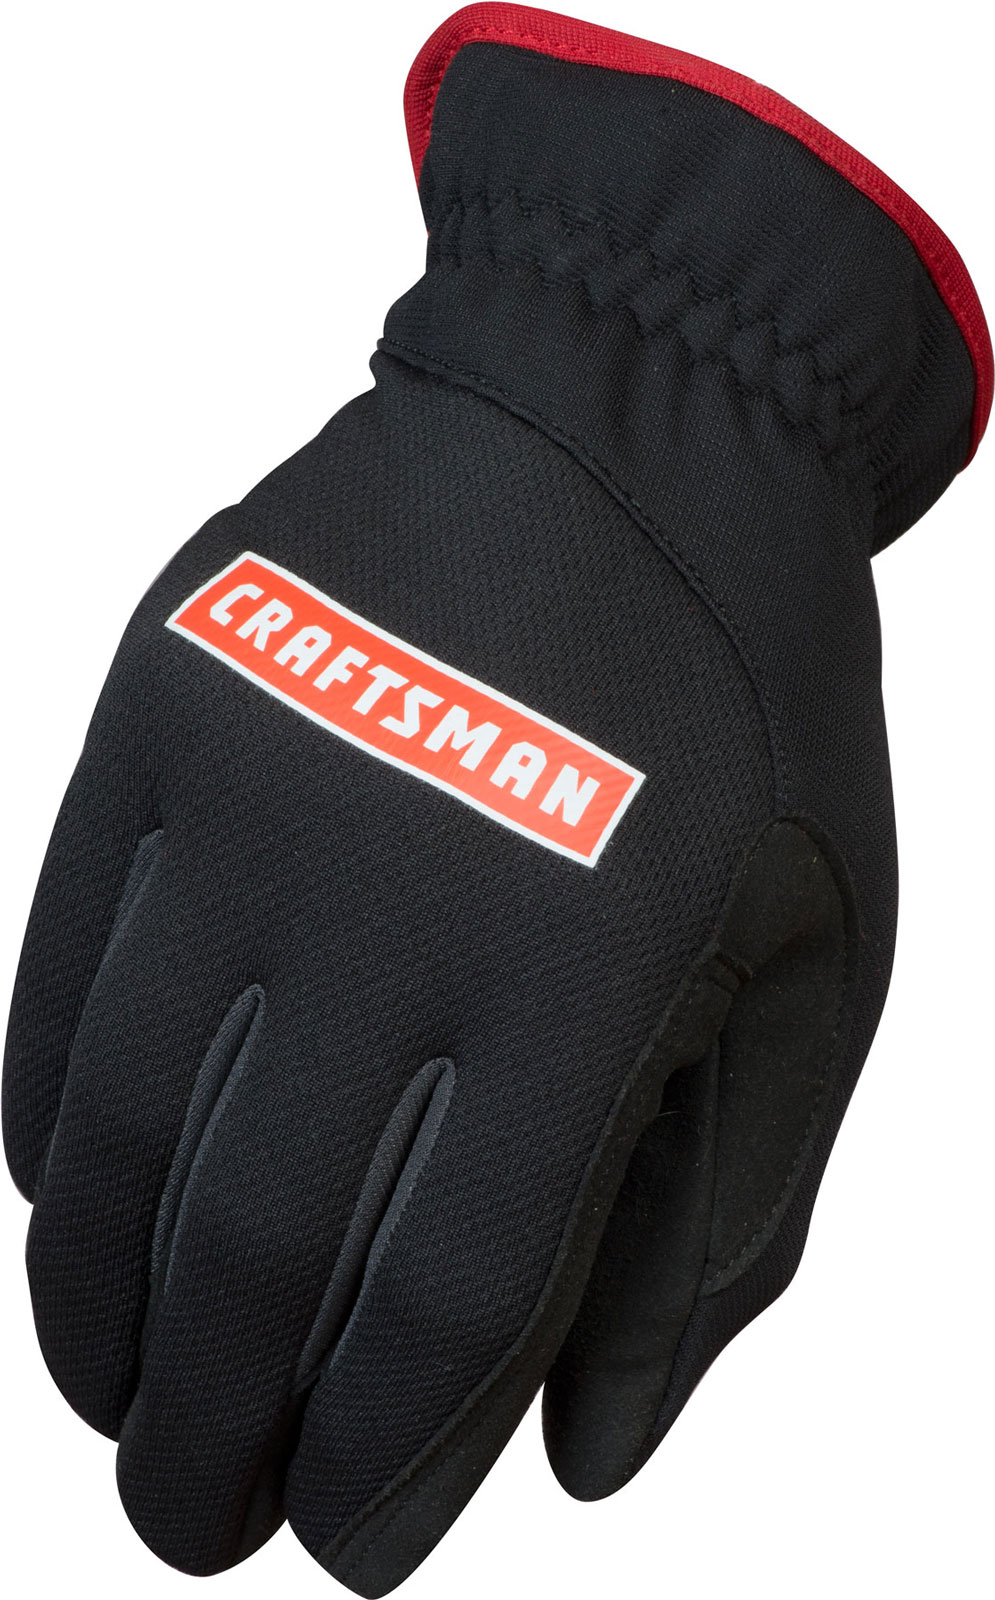 Craftsman Utility Glove Small/Medium